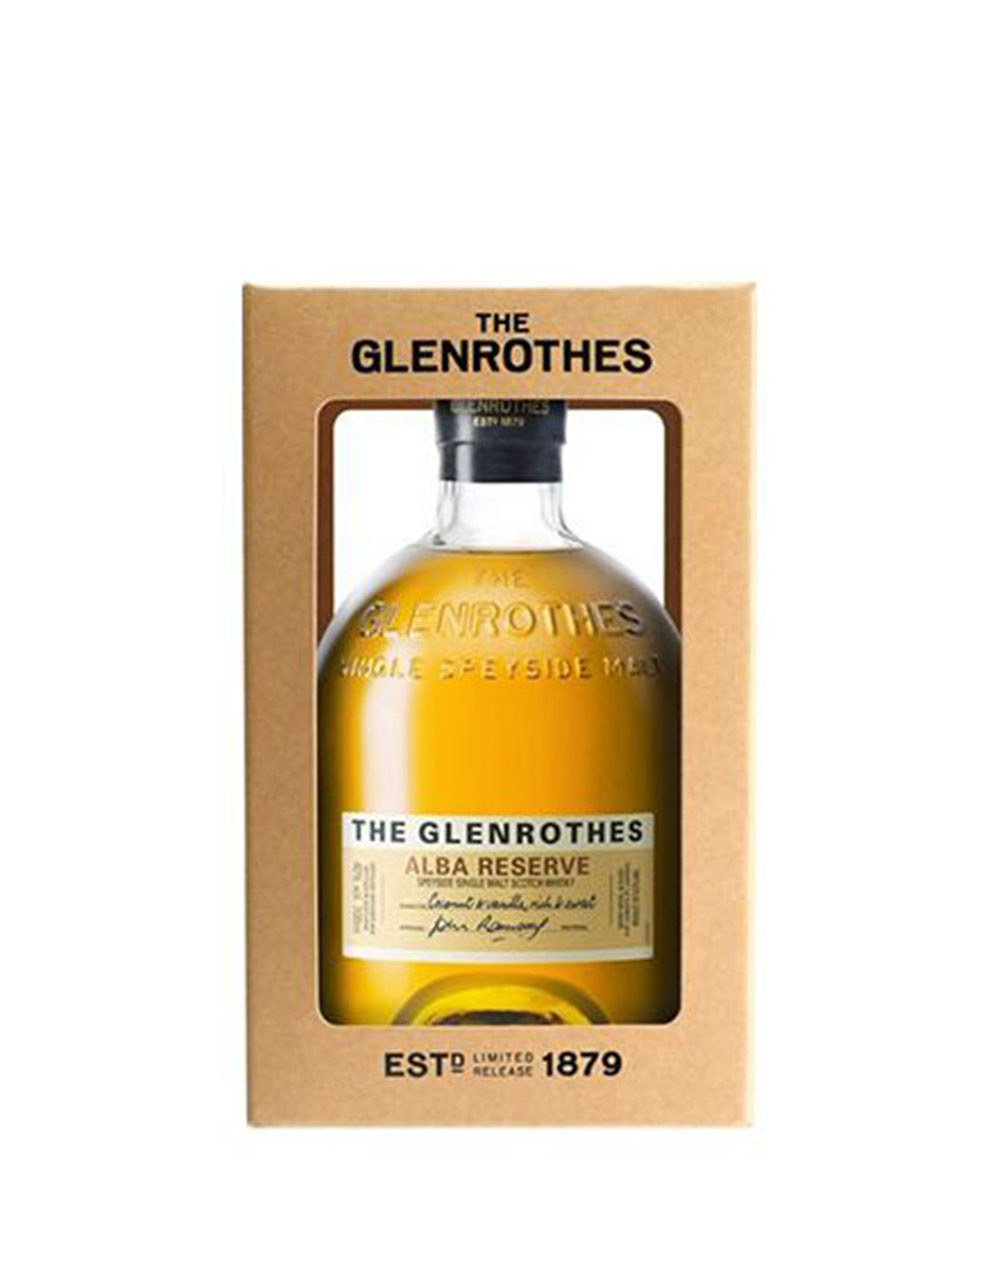 The Glenrothes Alba Reserve Single Malt Scotch Whisky